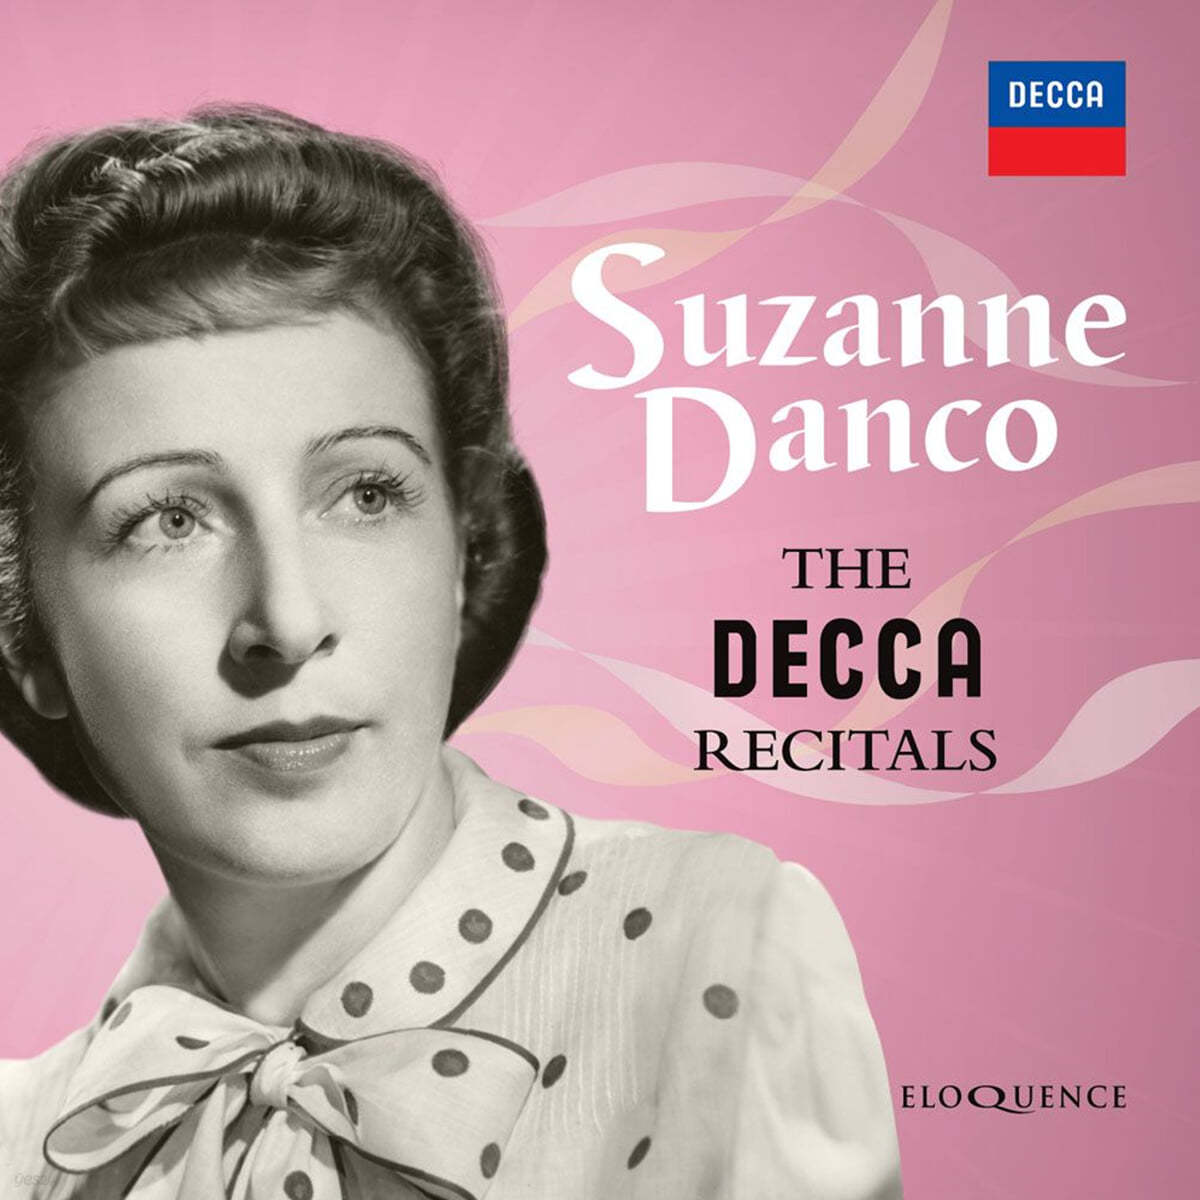 Suzanne Danco 수잔 당코 데카 리사이틀 전집 (The Decca Recitals) 